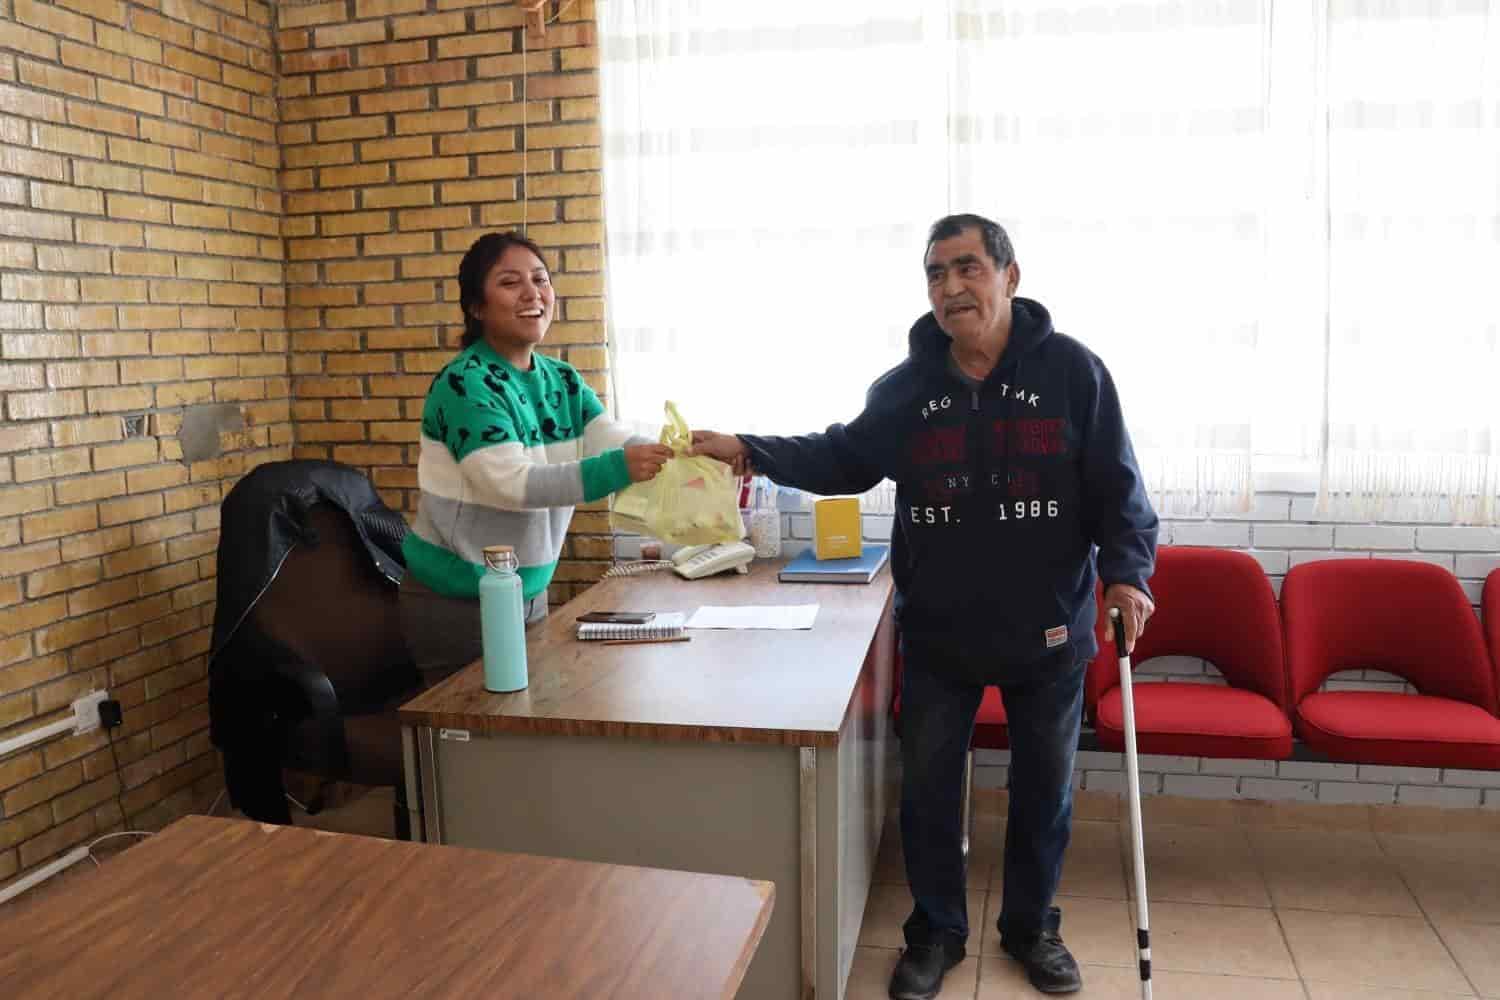 Habitantes donan  medicamento a Salud Municipal